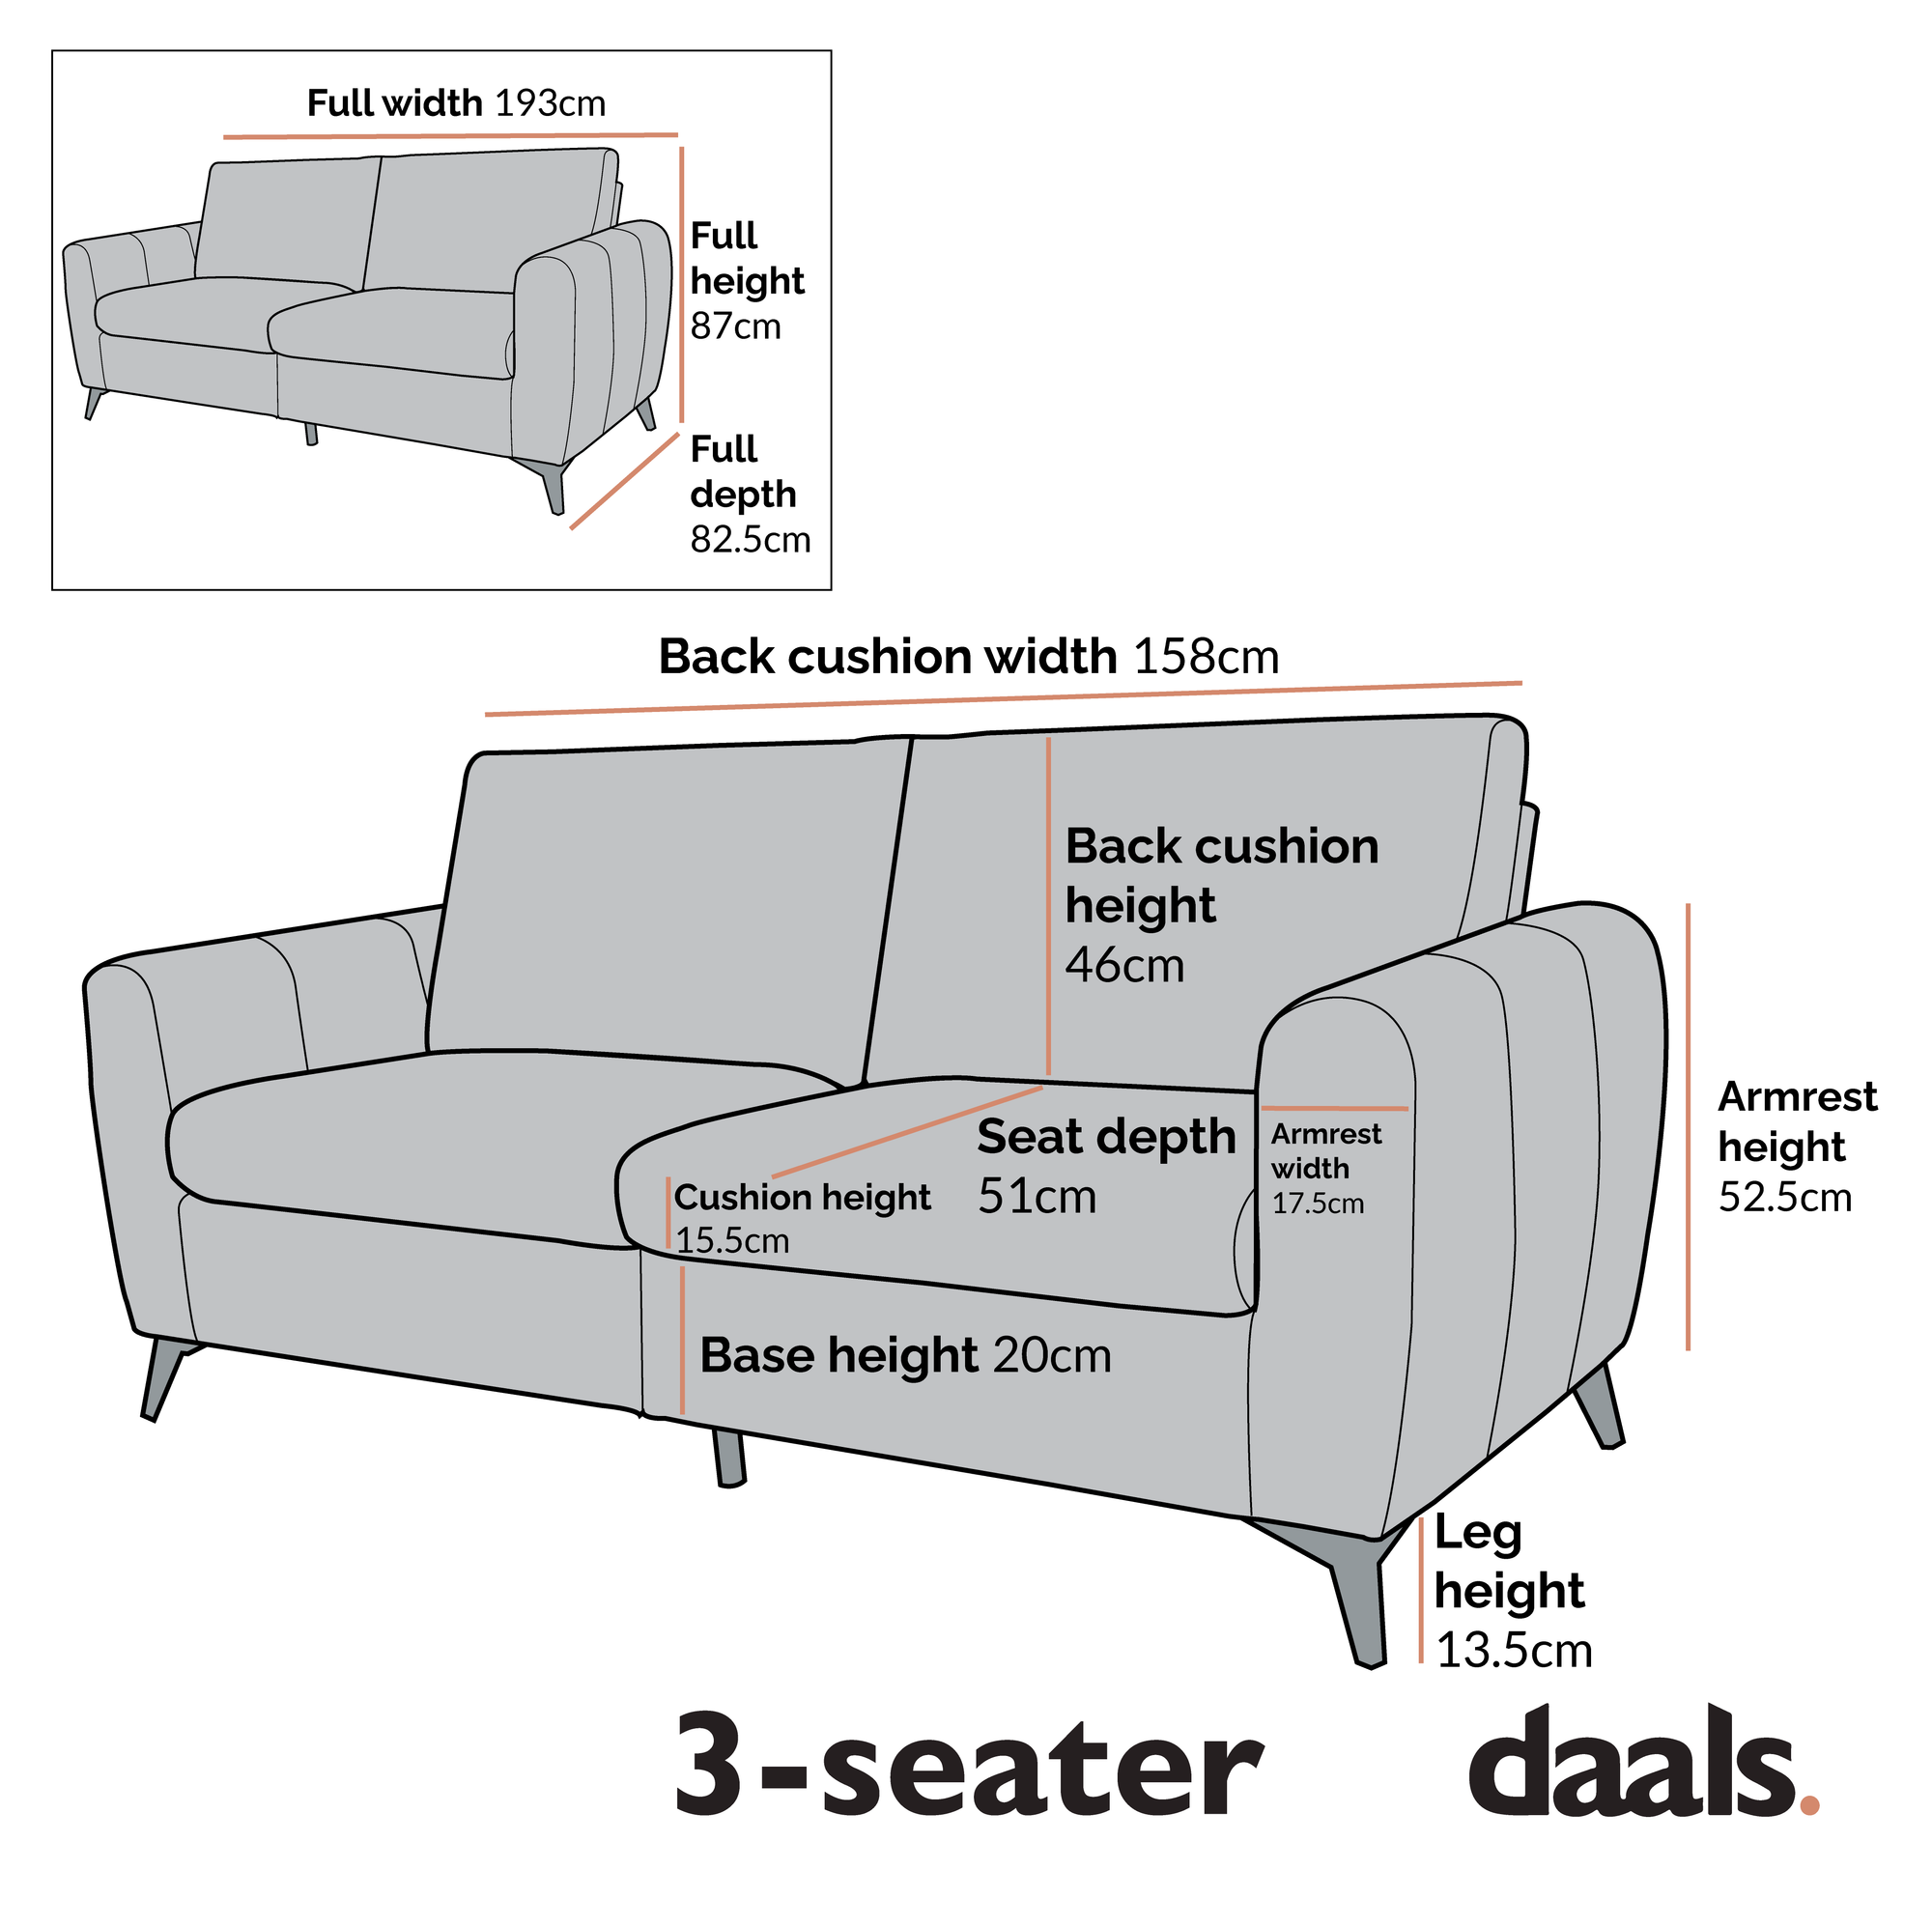 Noak 3-Seater Beige Woven Fabric Sofa with Chrome Legs